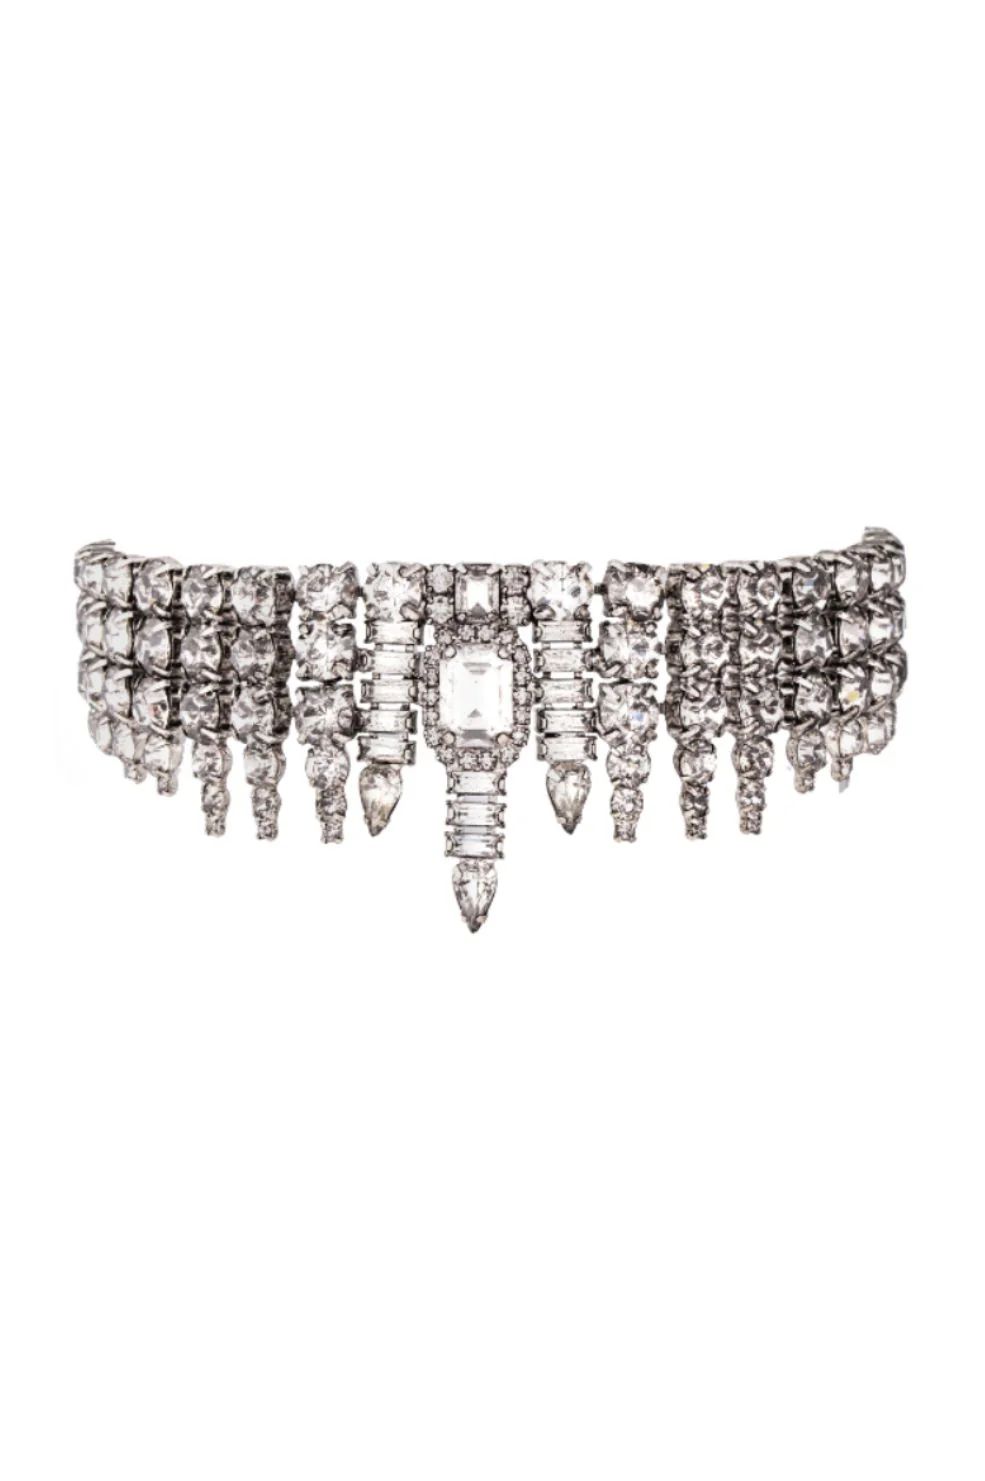 Luxury Statement Necklace | Oxidized Brass & Swarovski Crystals | Vintage One of a Kind Look | Ad... | DYLANLEX